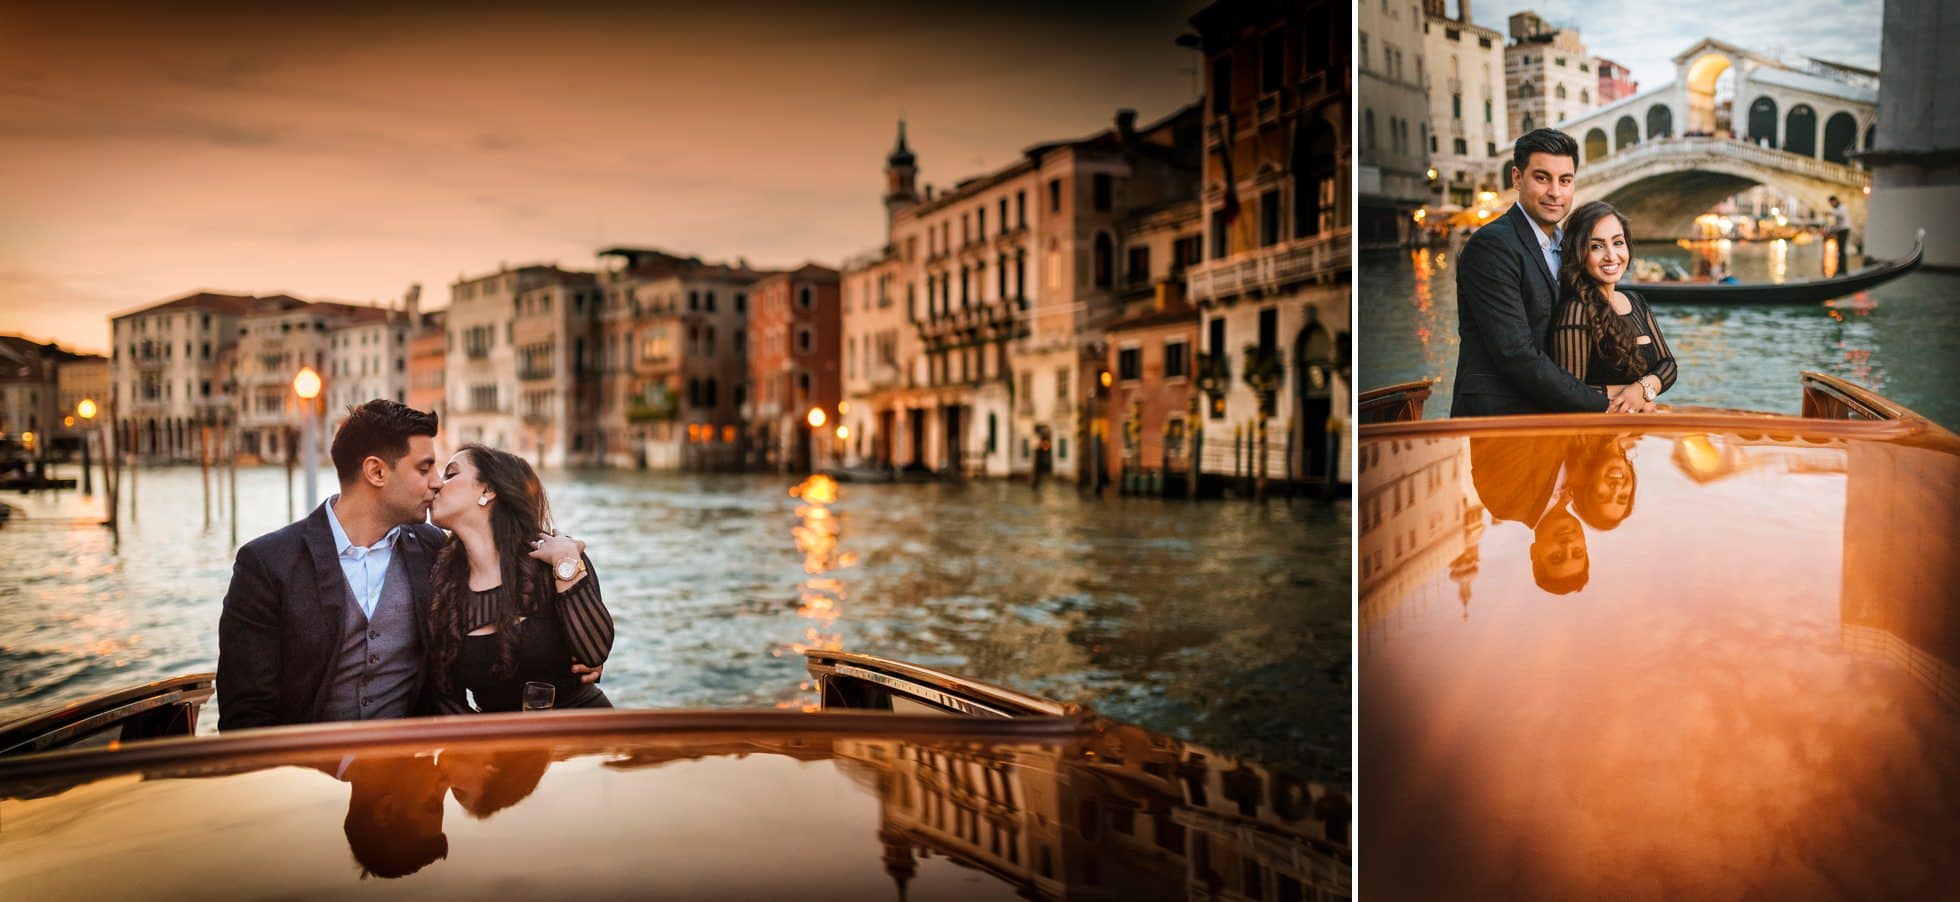 Fotografo matrimonio venezia